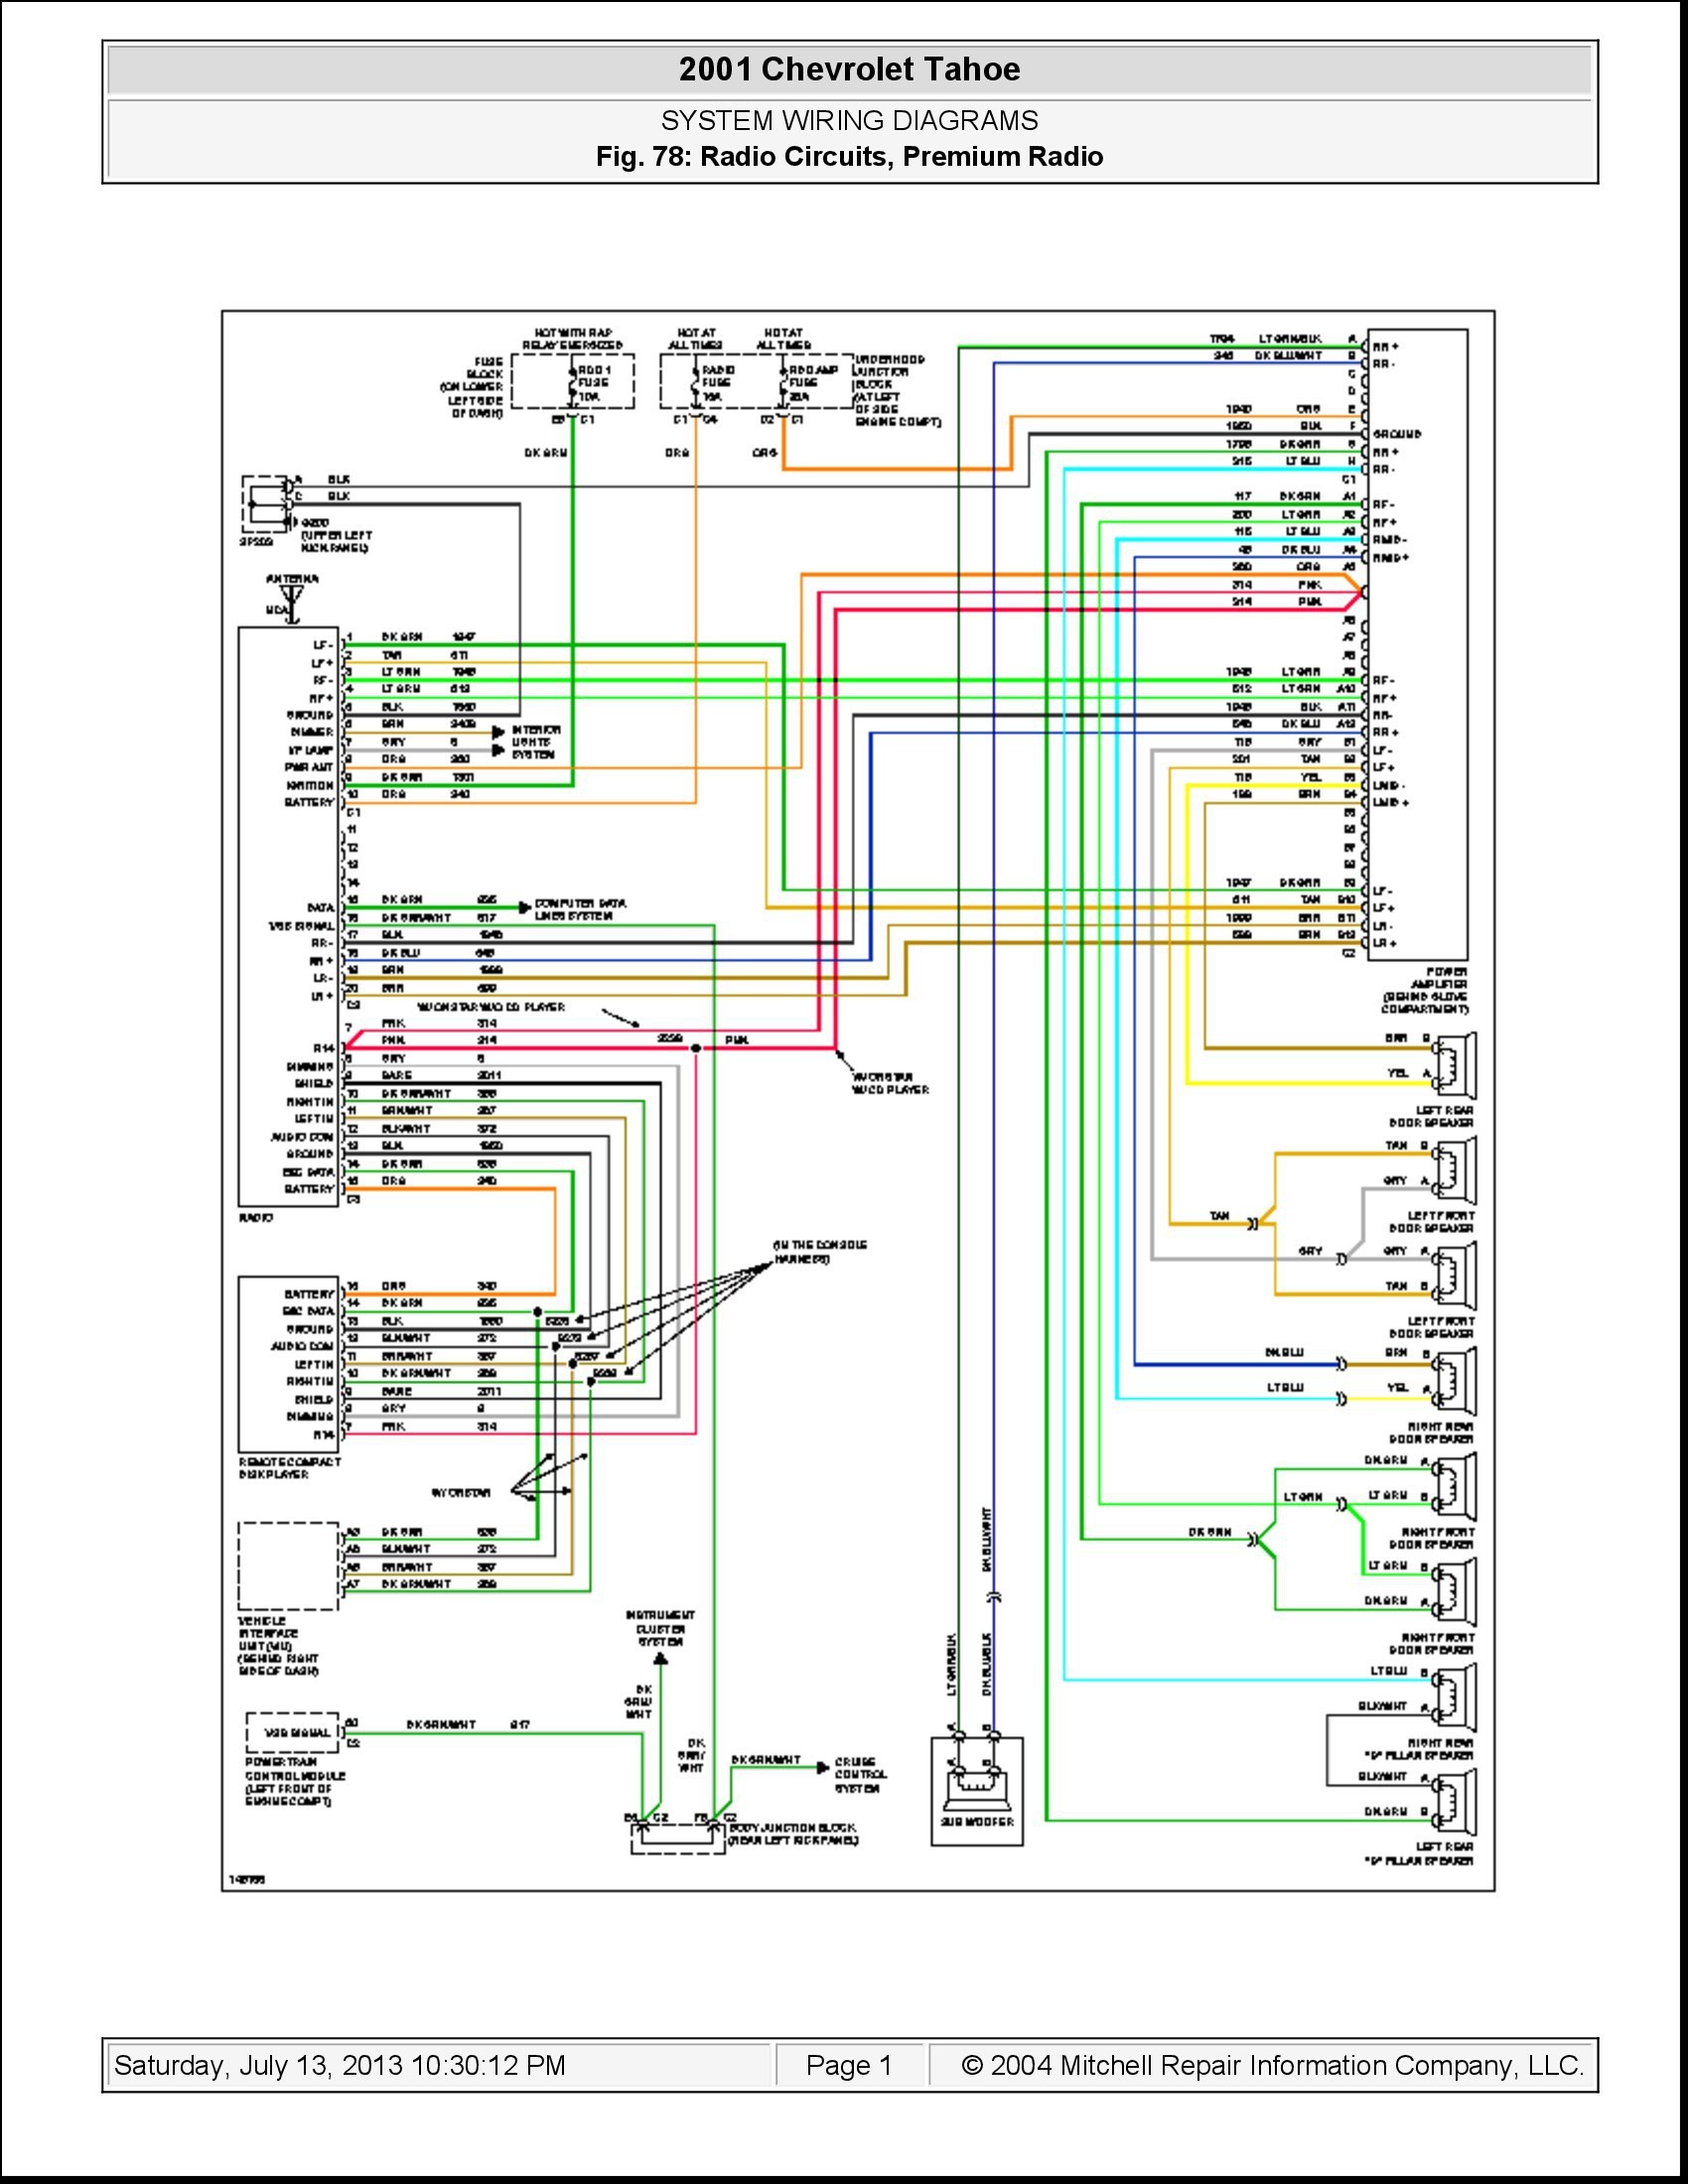 Car Suspension System Diagram 1998 Tahoe Wiring Diagram Experts Wiring Diagram • Of Car Suspension System Diagram